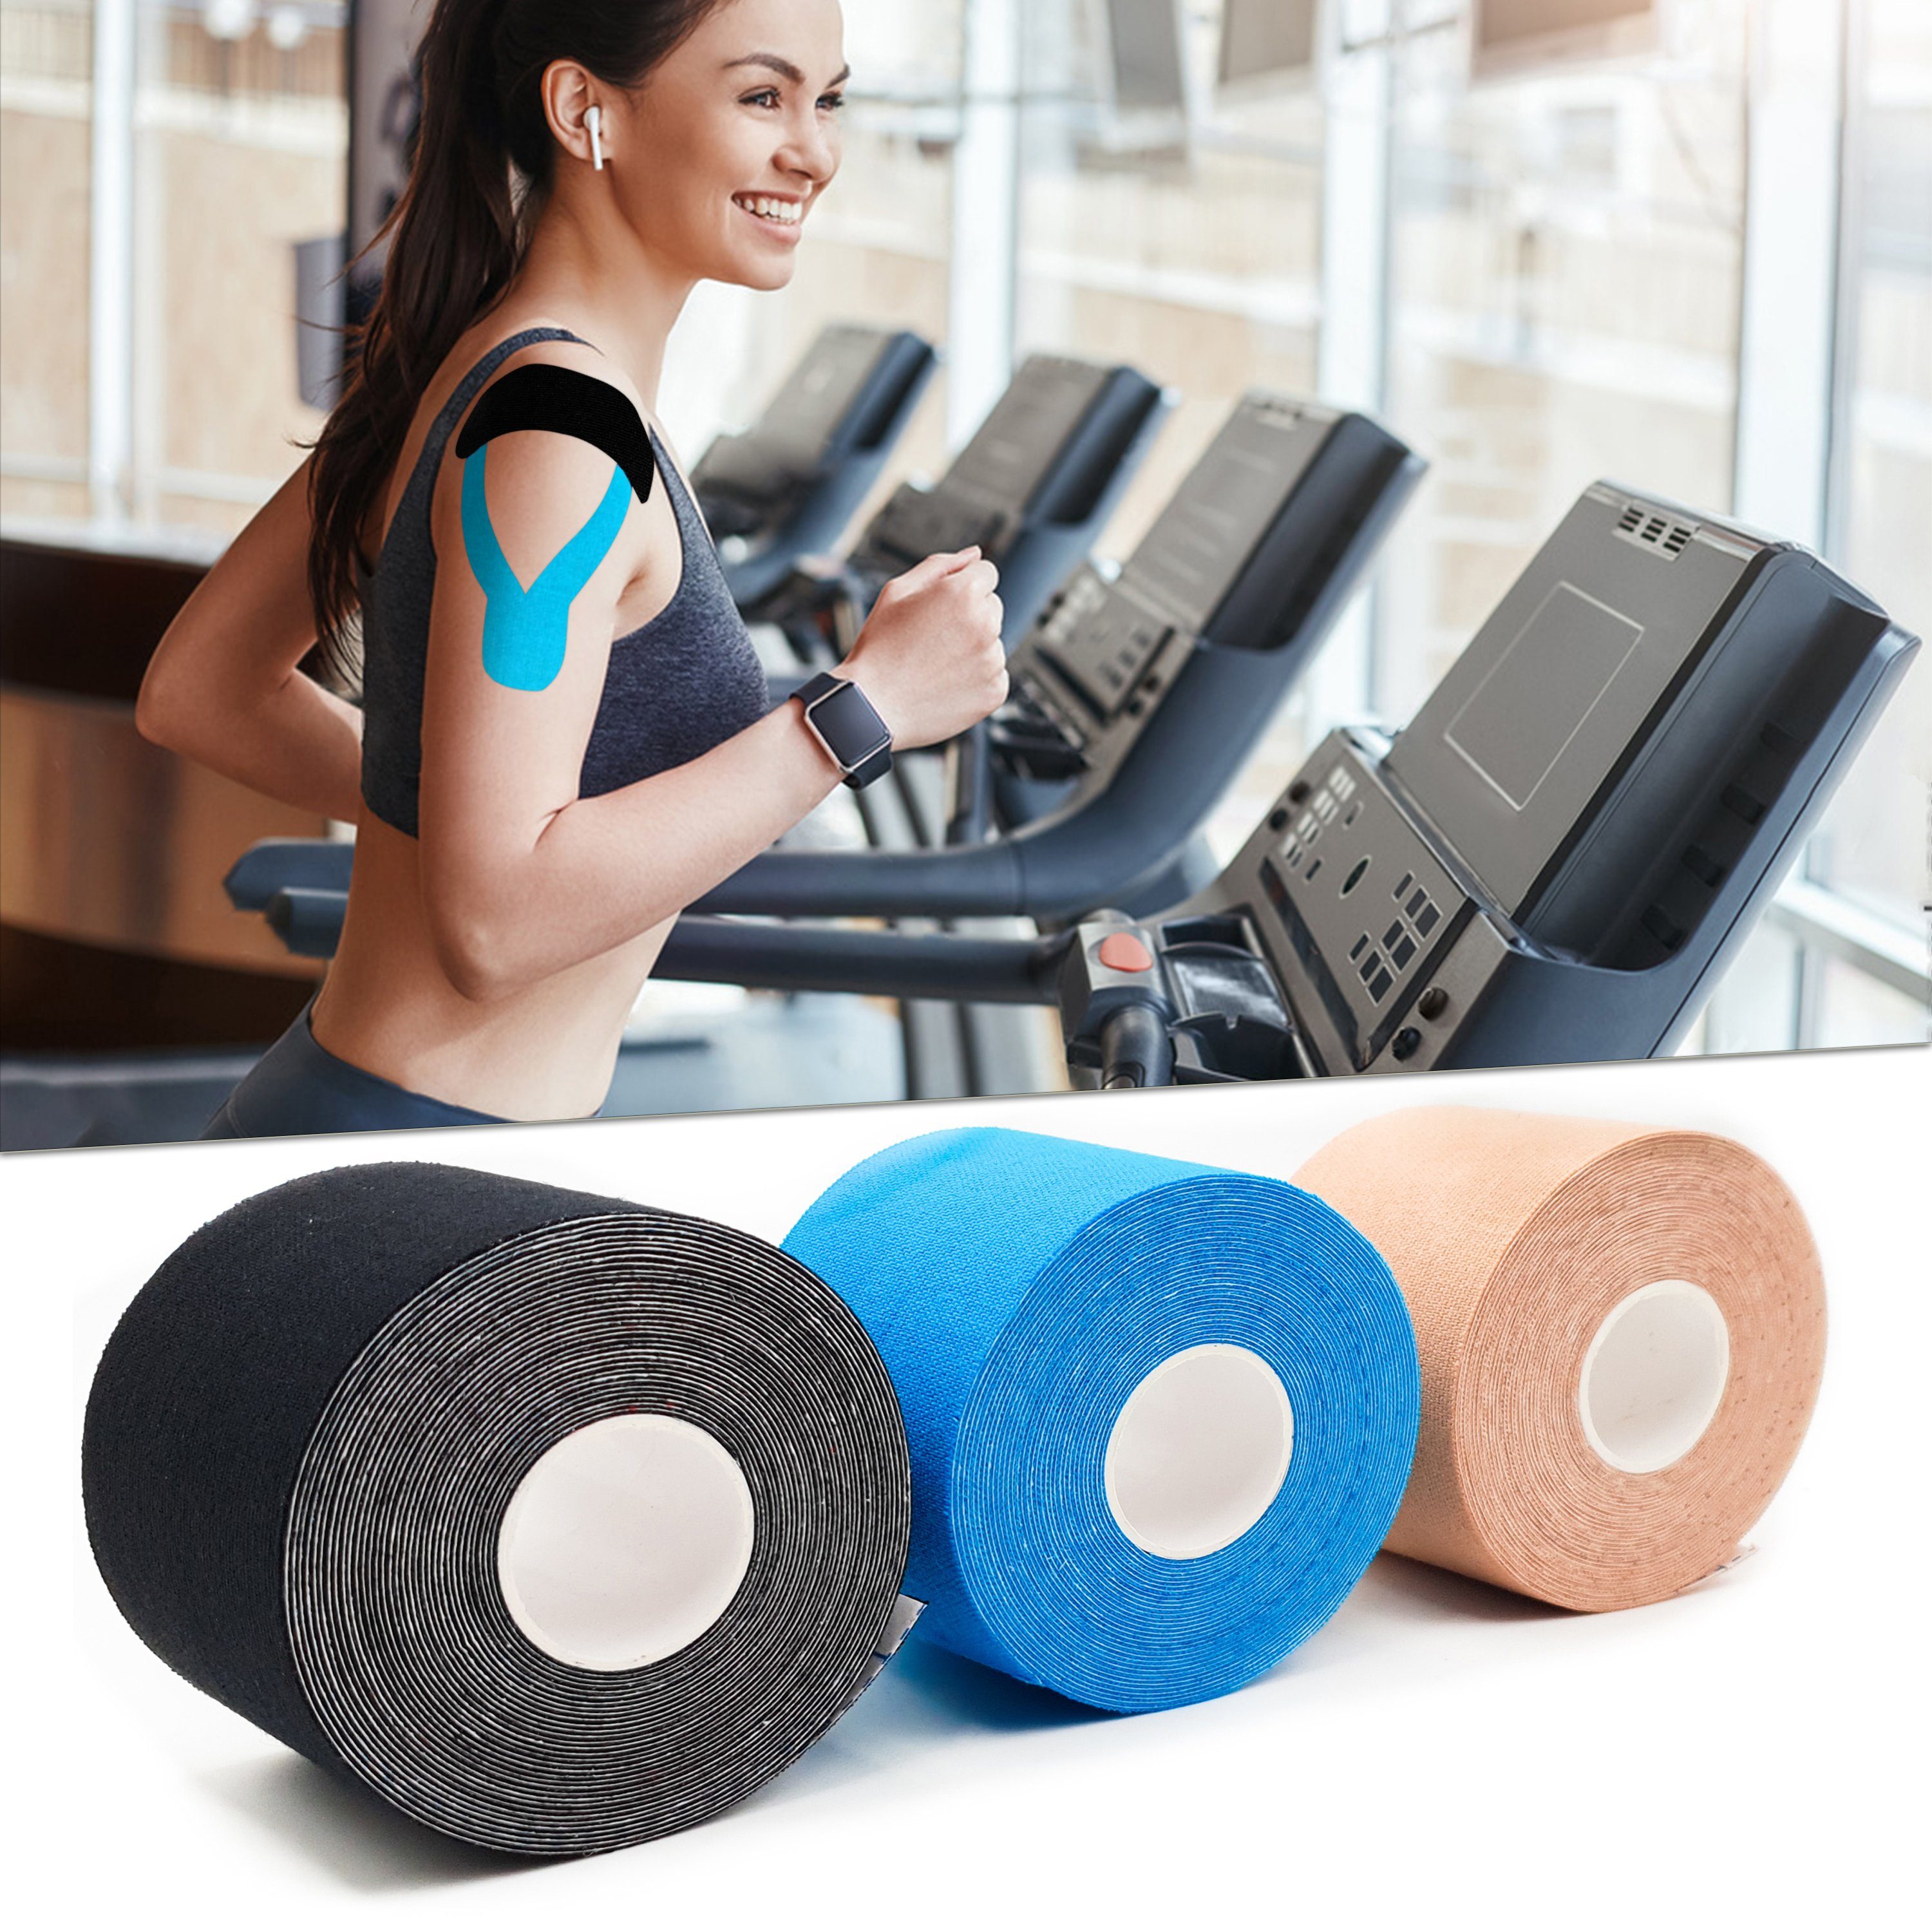 Axion Kinesiologie-Tape Kinesio-Tapes - Wasserfeste Tapes in blau, beige, schwarz (Set, 3-St) Physiotape, Sporttape Bandage, für Ihre Physiotherapie